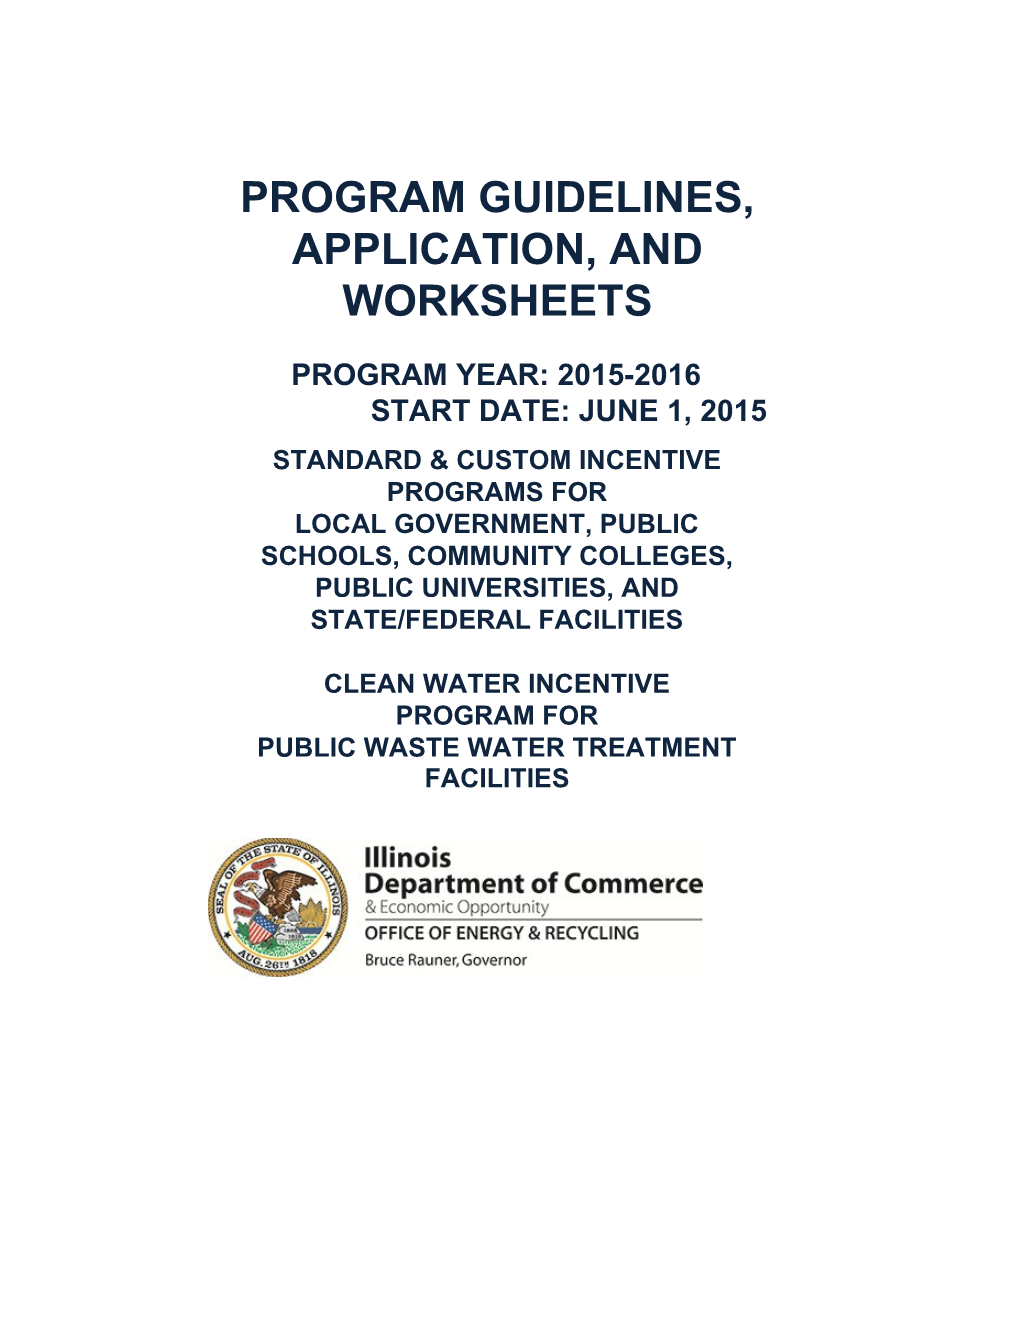 Program Guidelines, Application, and Worksheets